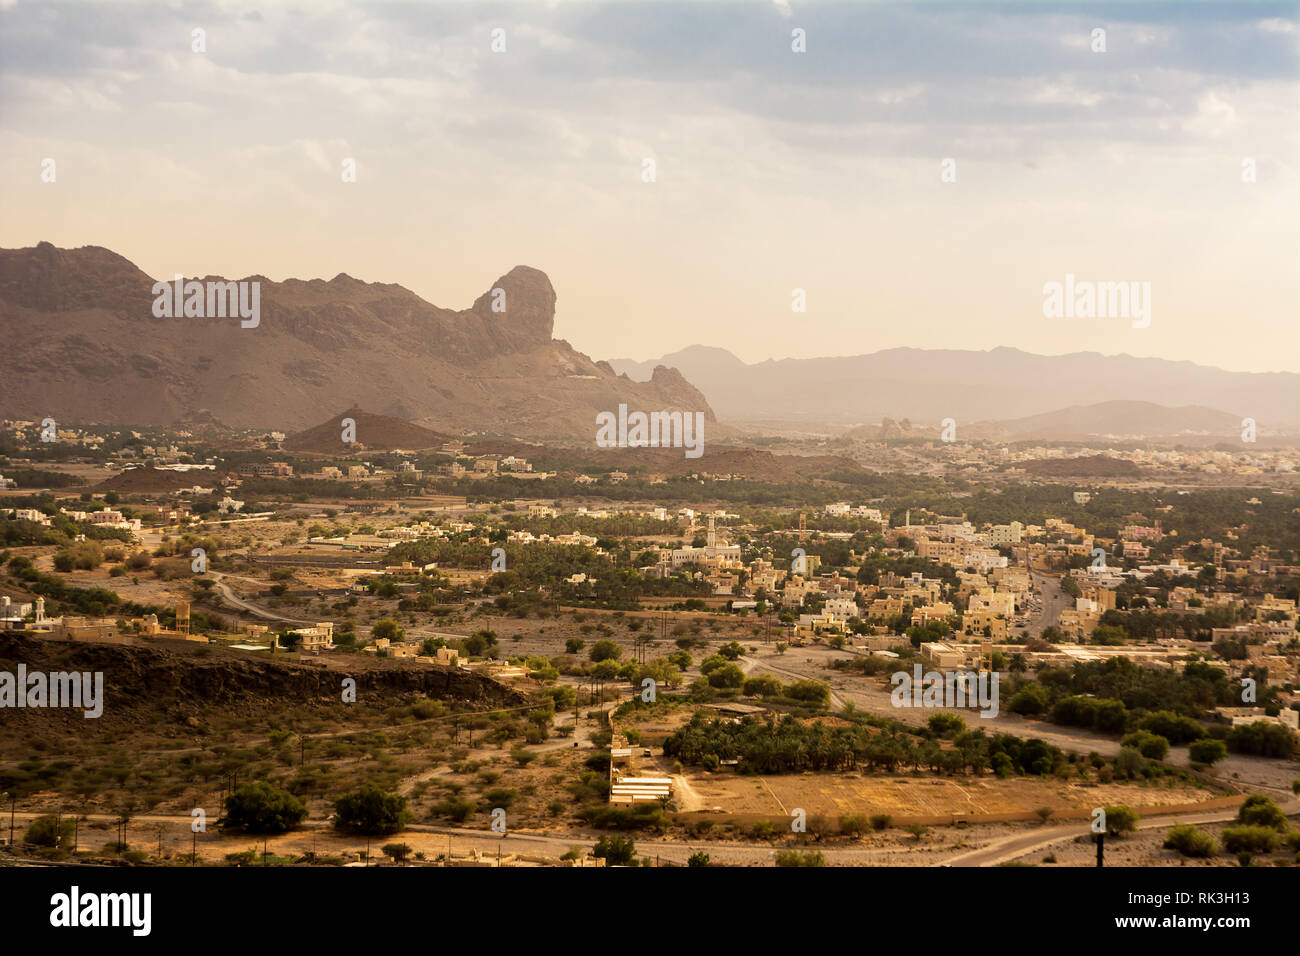 The village of Al Hamra seen from high (Oman) Stock Photo